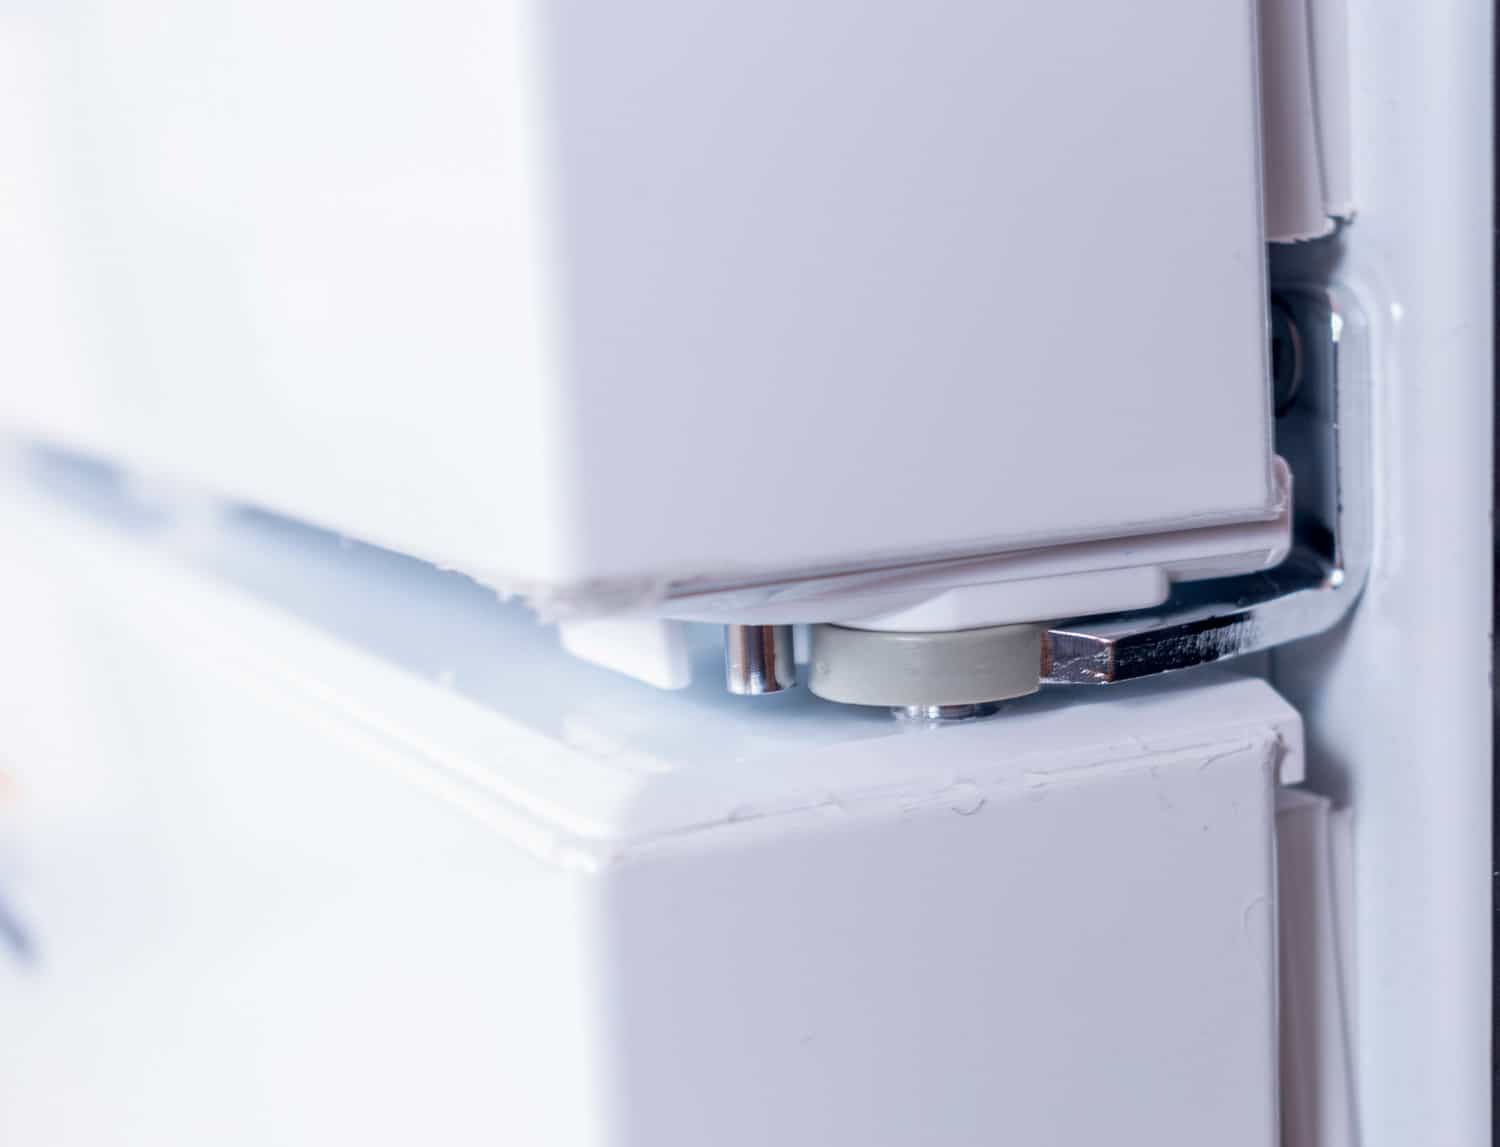 Metal hinge of a white color Refrigerator door